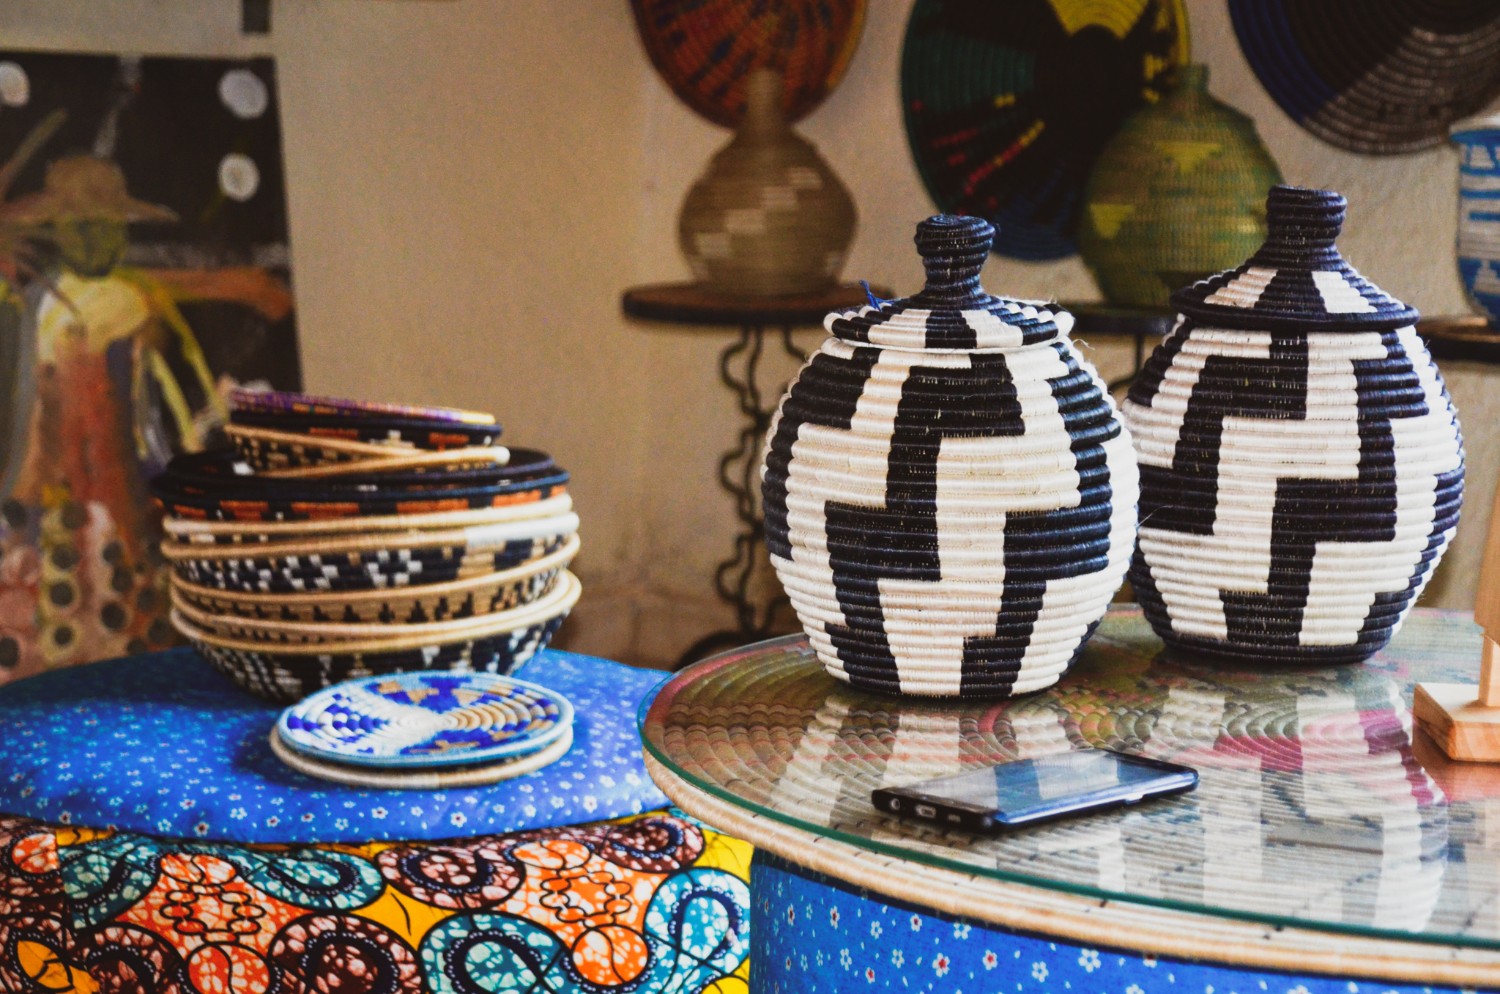 Baskets of Rwanda in a black and white diagonal zig-zag pattern